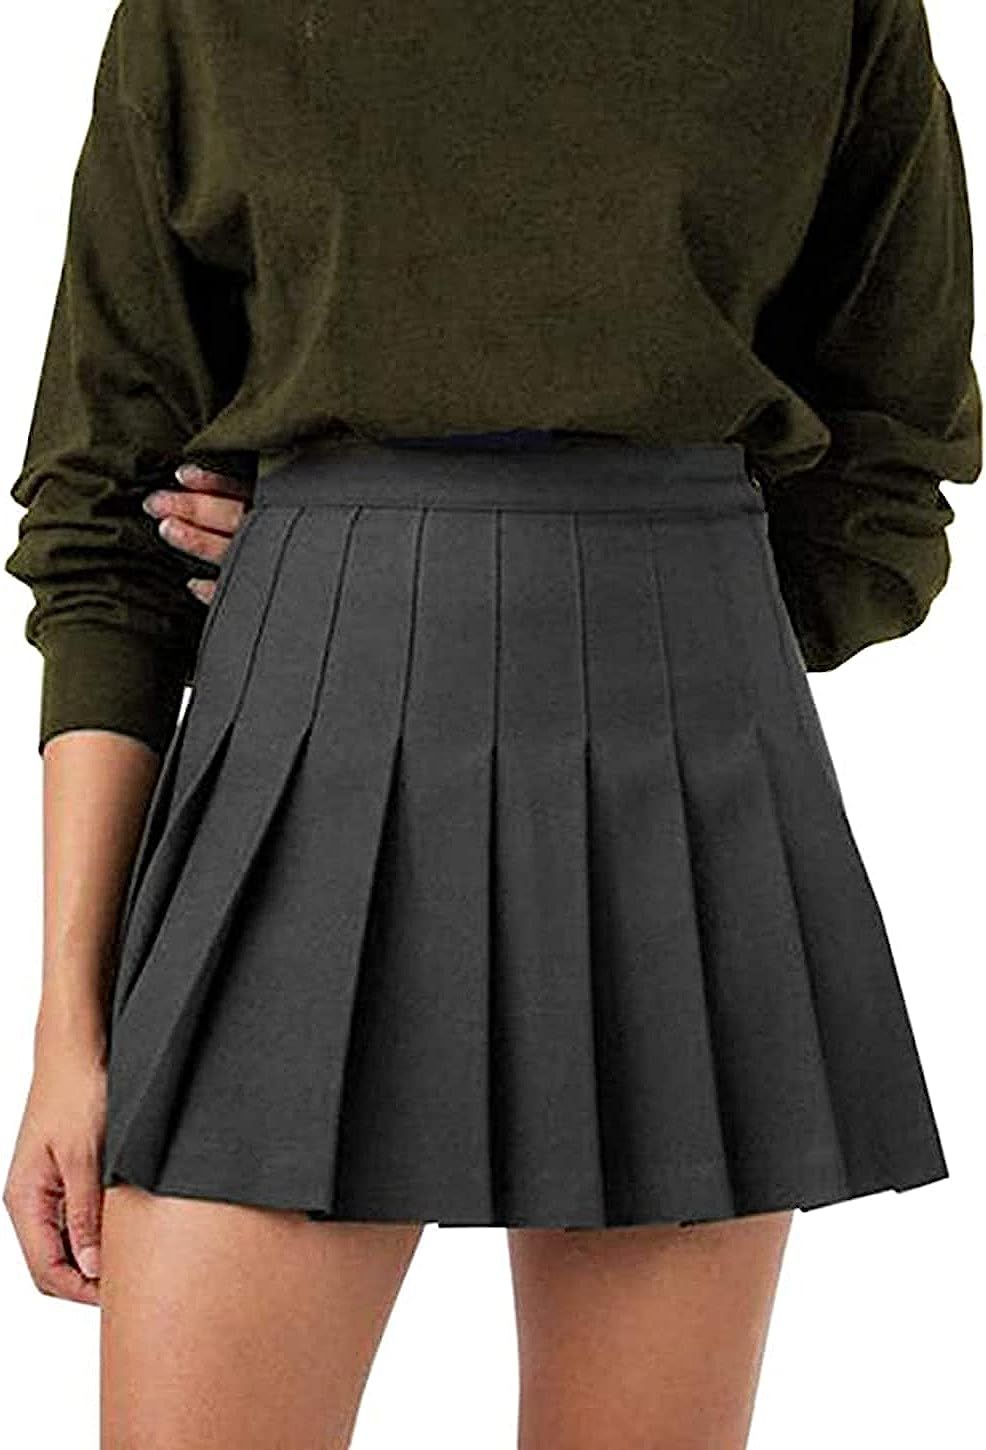 Women Girls High Waisted Pleated Skater Tennis School A-Line Skirt Uniform Skirts with Lining Sho... | Amazon (US)